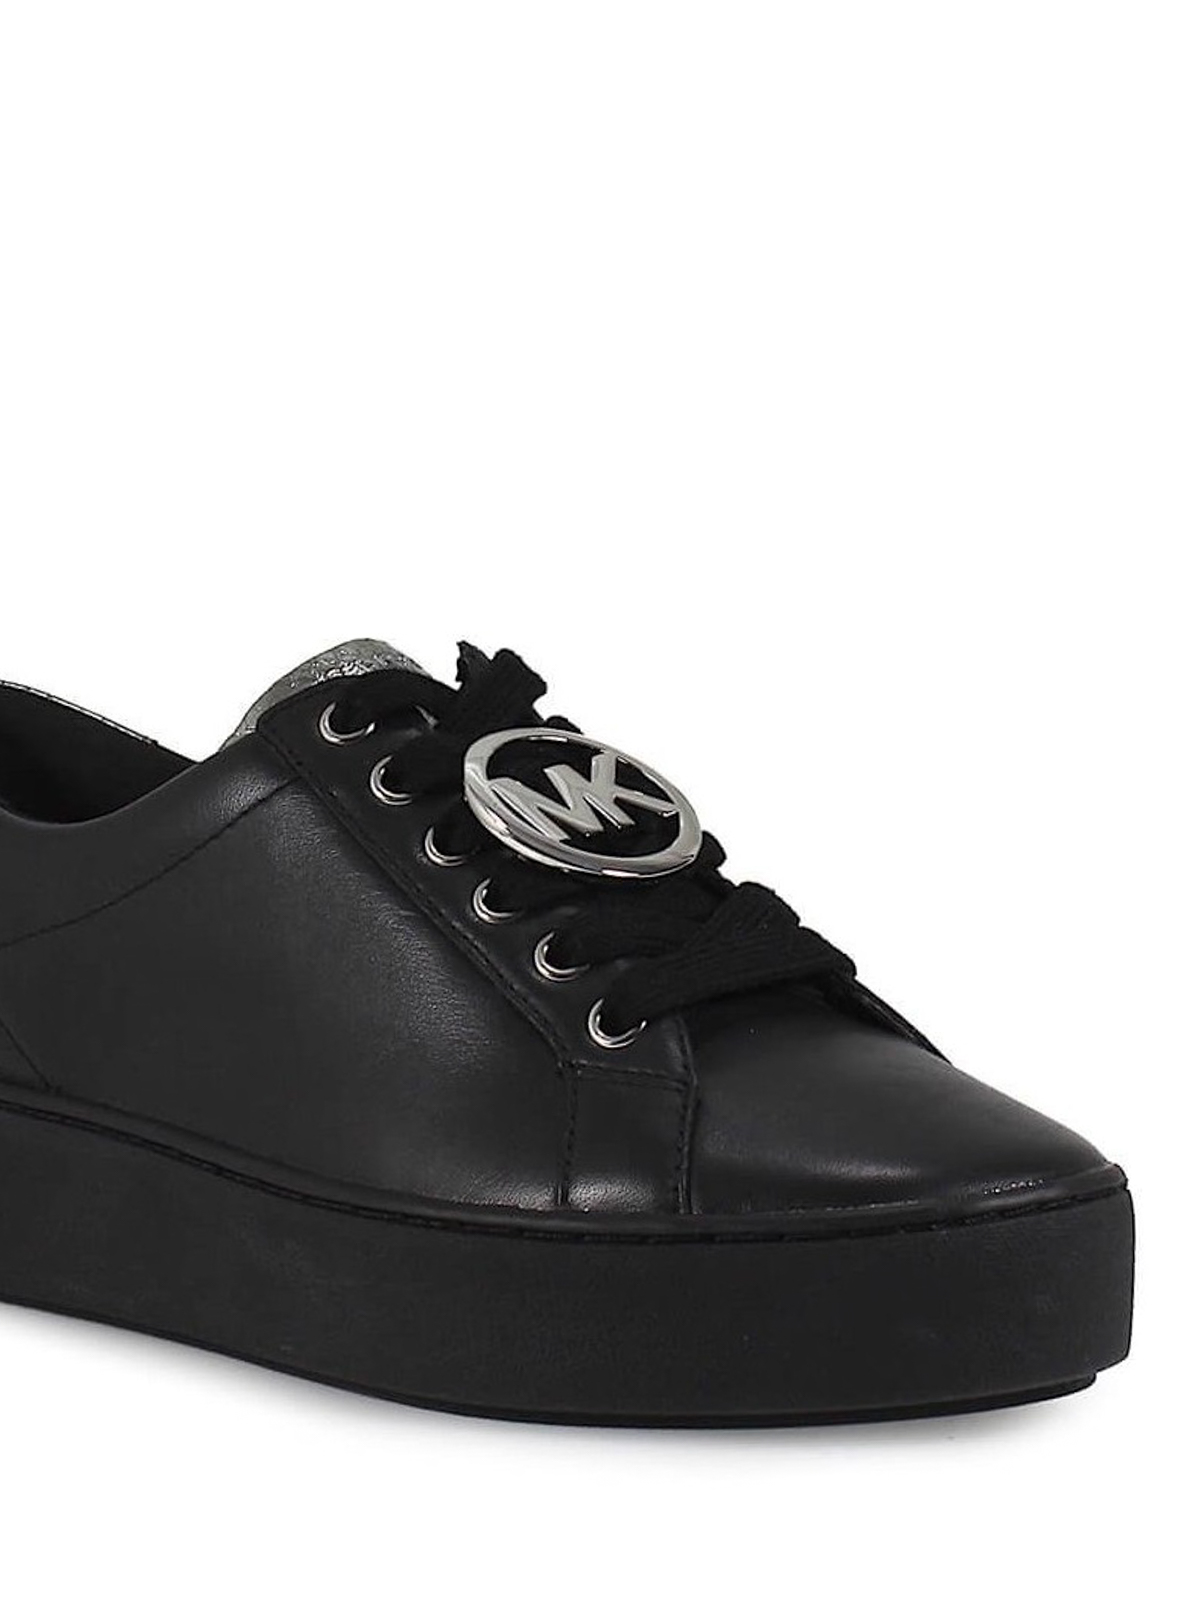 Michael Kors Black Sneakers